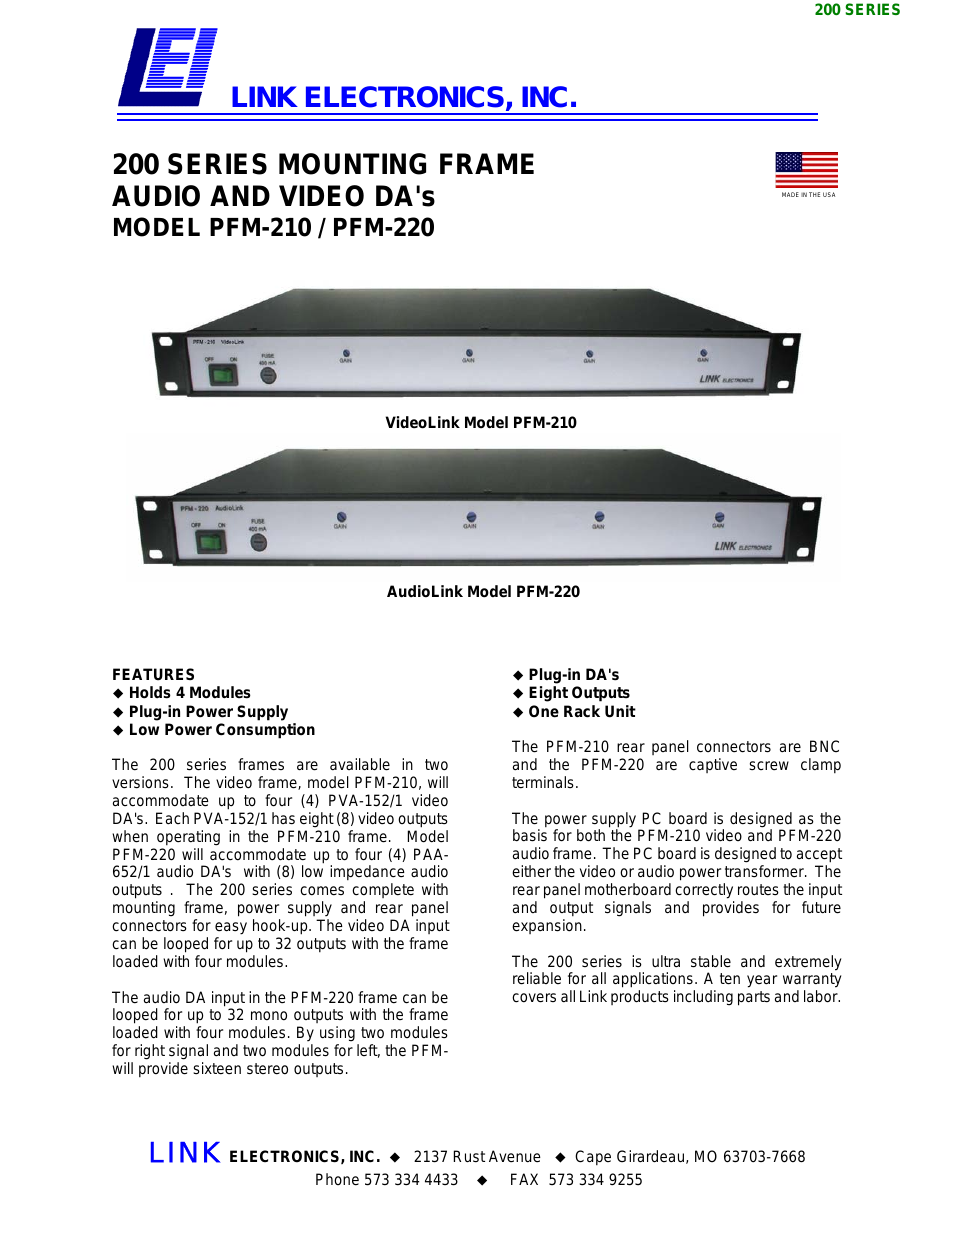 200 Series Mounting Frame Audio and Video DA's PFM-210